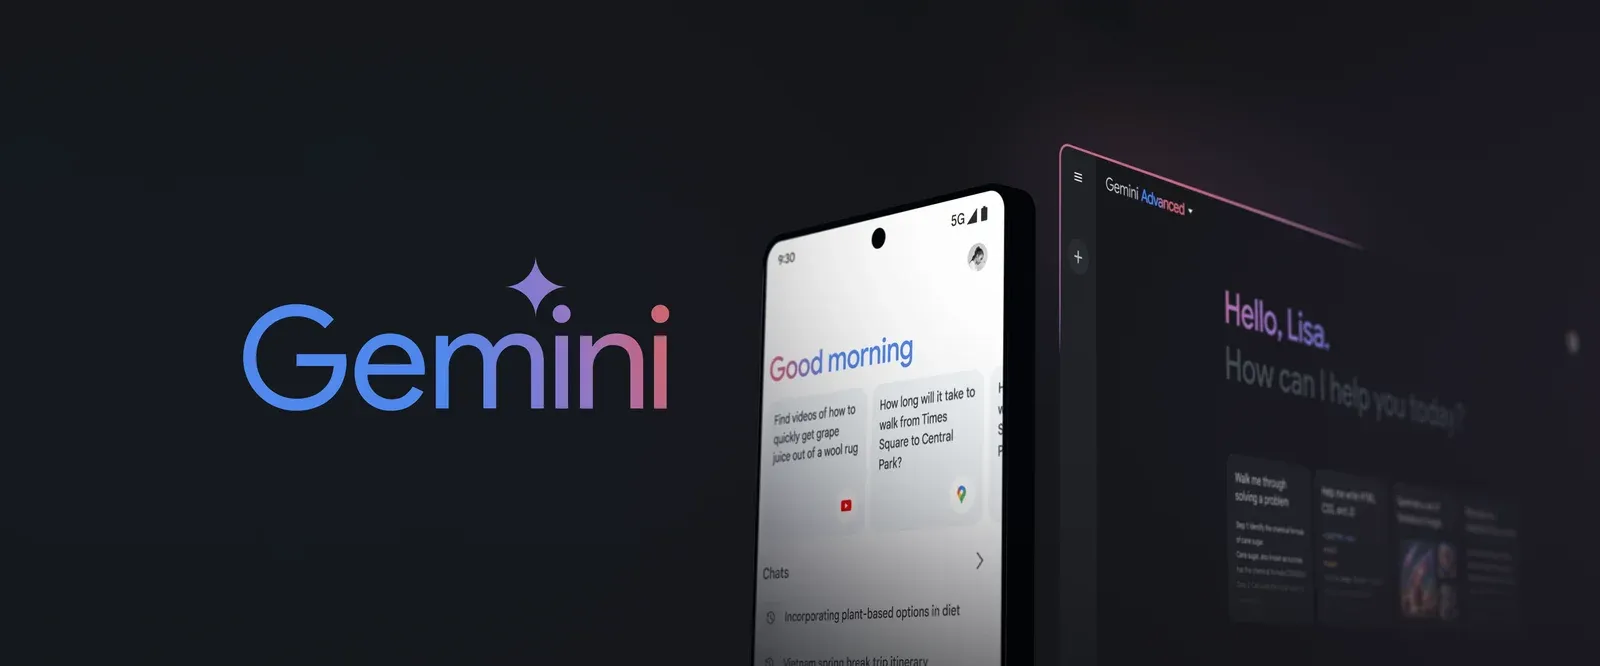 Google rebrands Bard as Gemini as part of a significant AI update